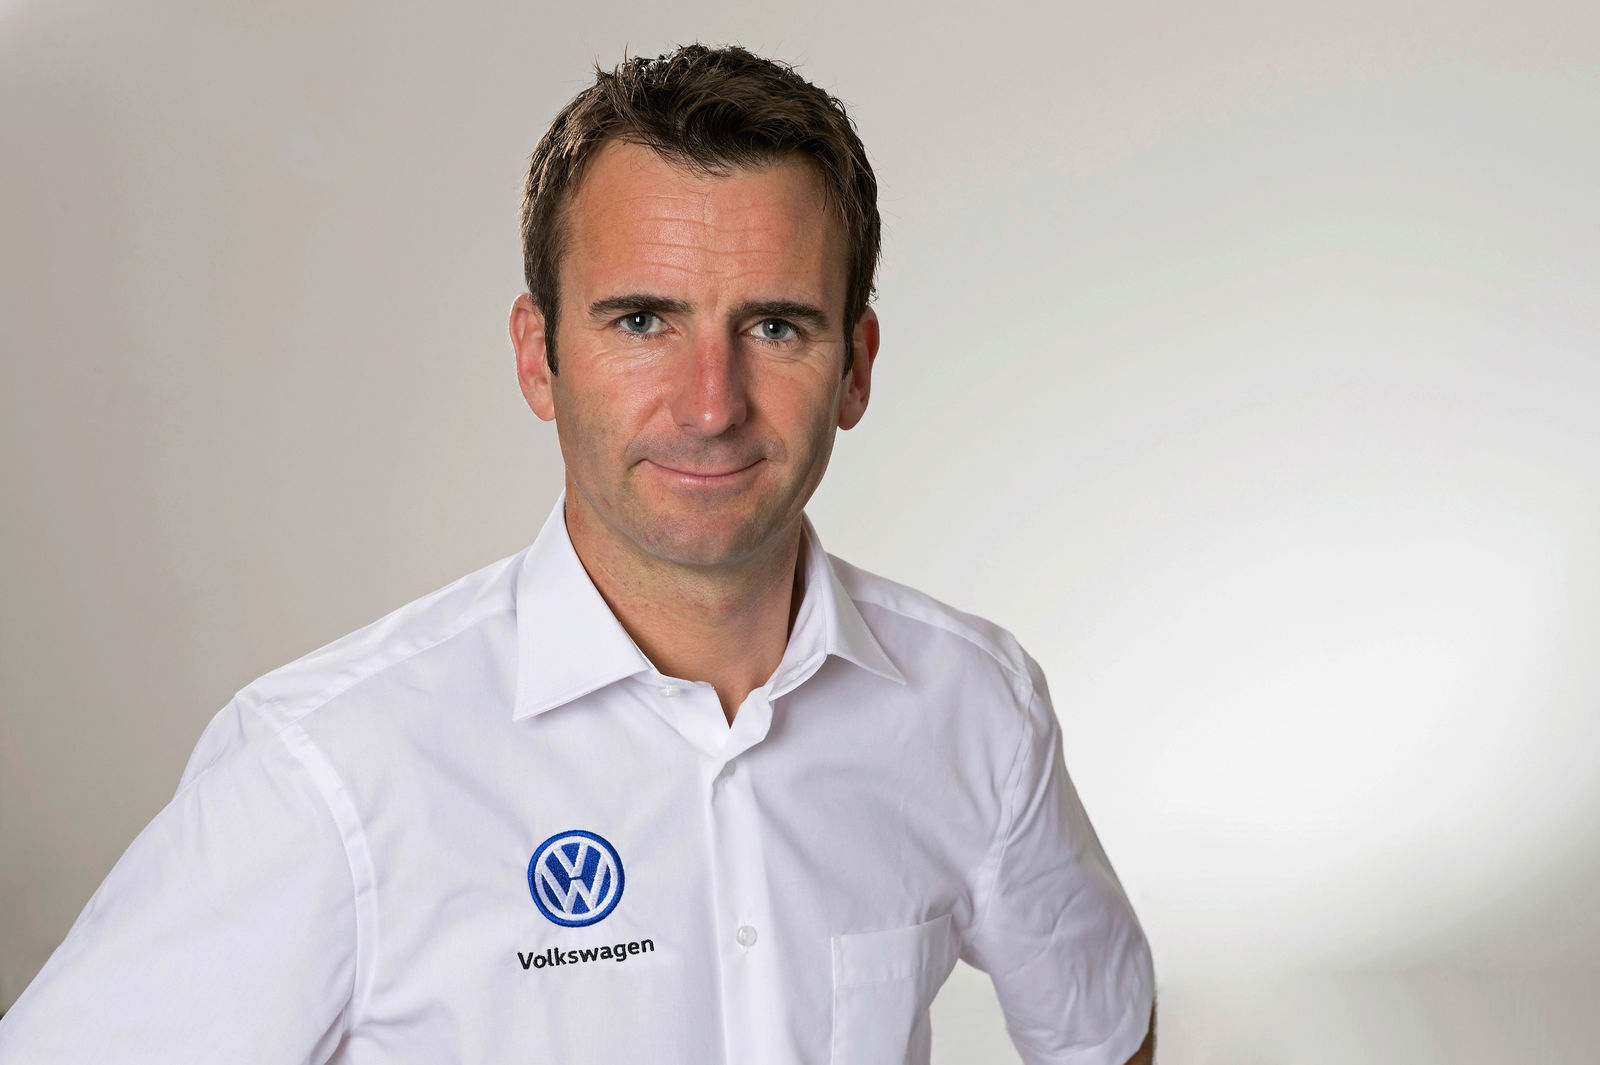 Volkswagen signs up Le Mans winner Romain Dumas for Pikes Peak International Hill Climb 2018